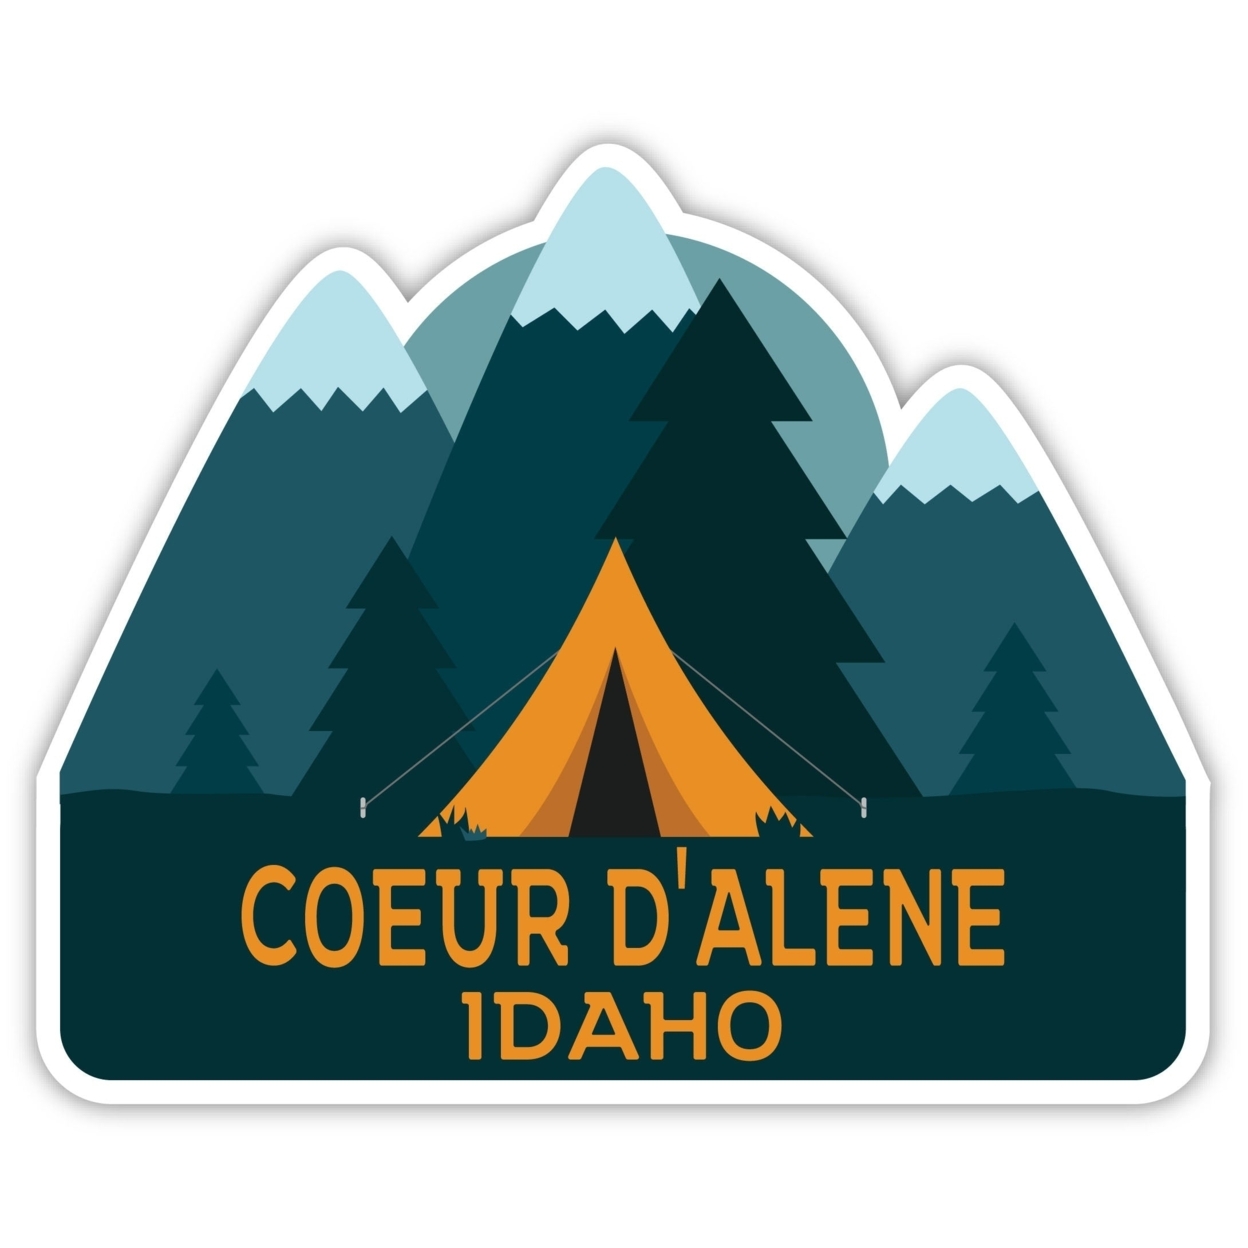 Coeur D'Alene Idaho Souvenir Decorative Stickers (Choose Theme And Size) - 4-Pack, 4-Inch, Adventures Awaits